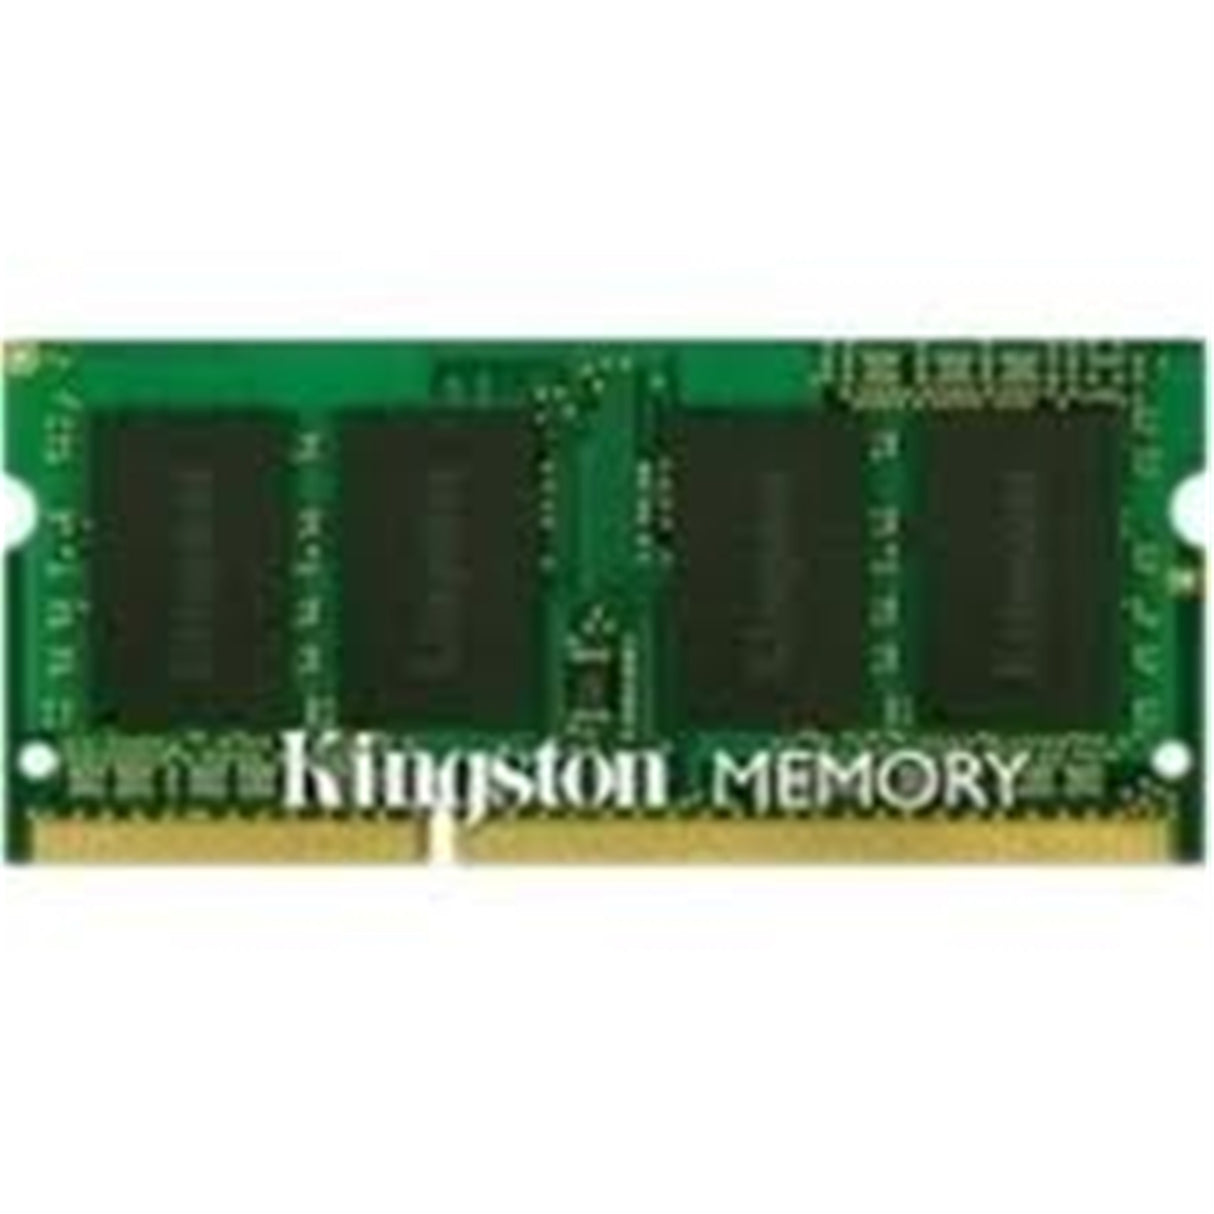 Kingston ValueRAM 8GB No Heatsink (1 x 8GB) DDR3 1600MHz SODIMM System Memory